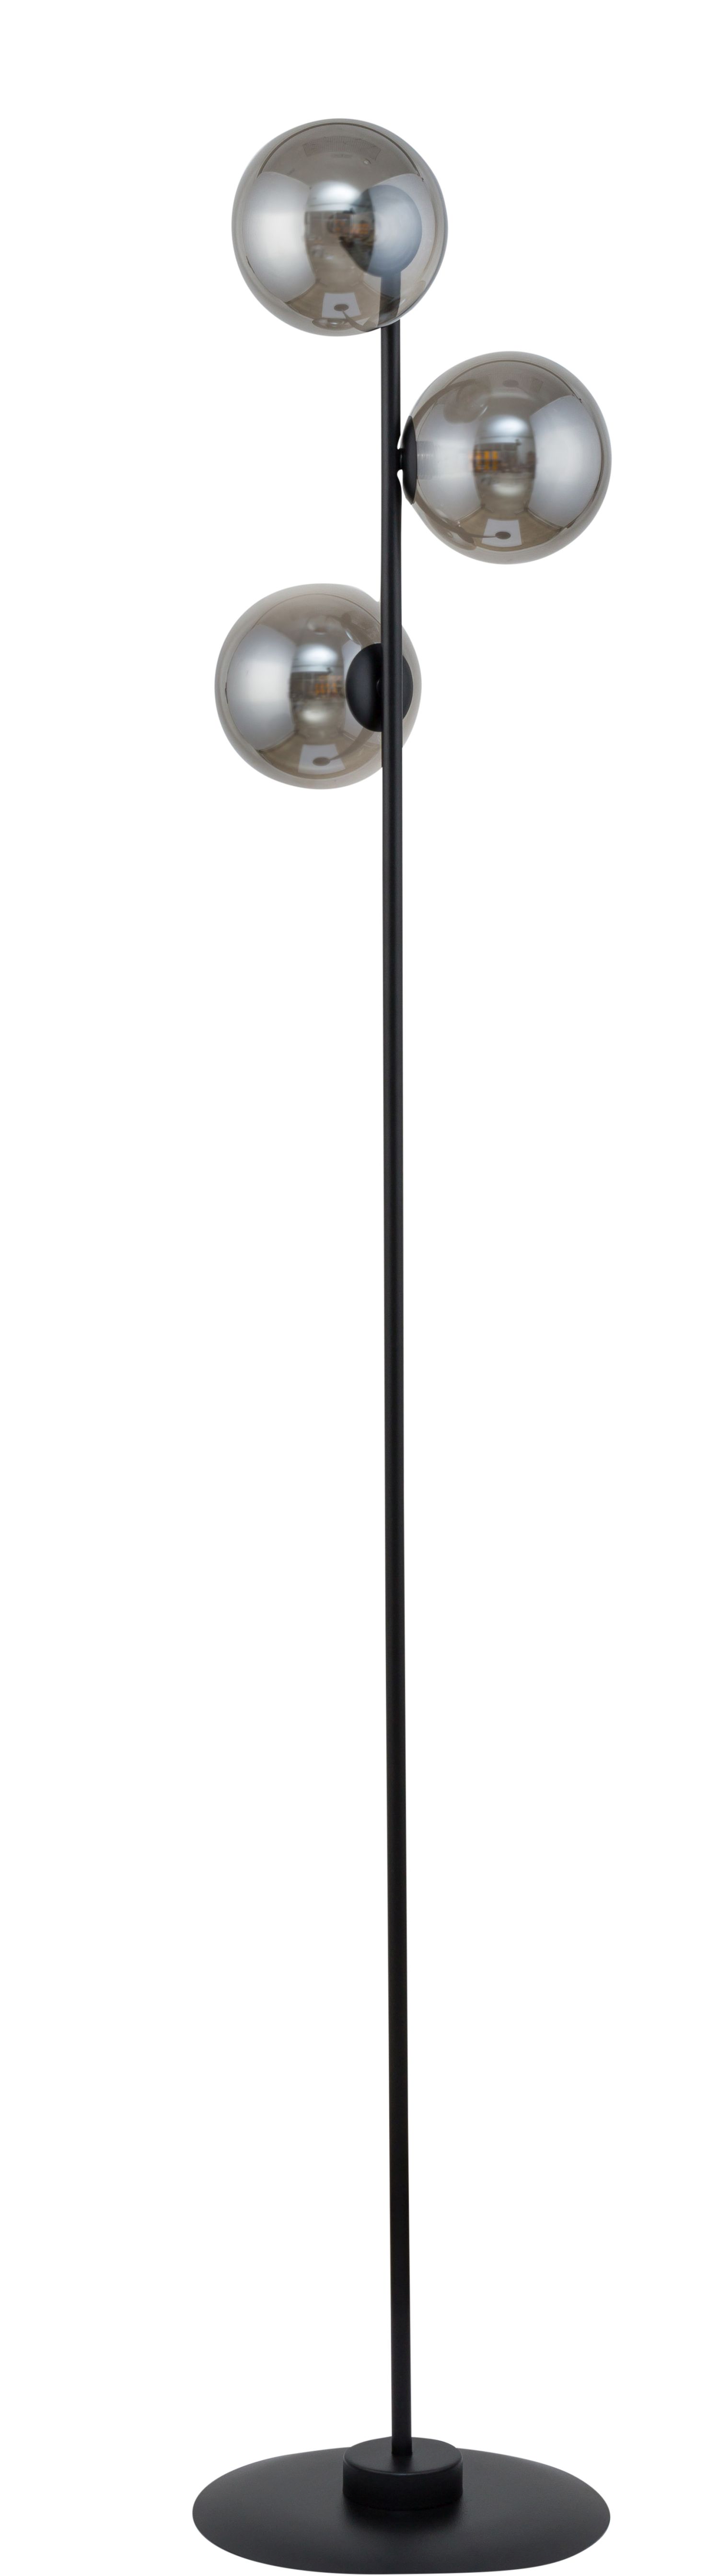 Stehleuchte 3-flammig Schwarz Glas Grau H:161 cm Modern